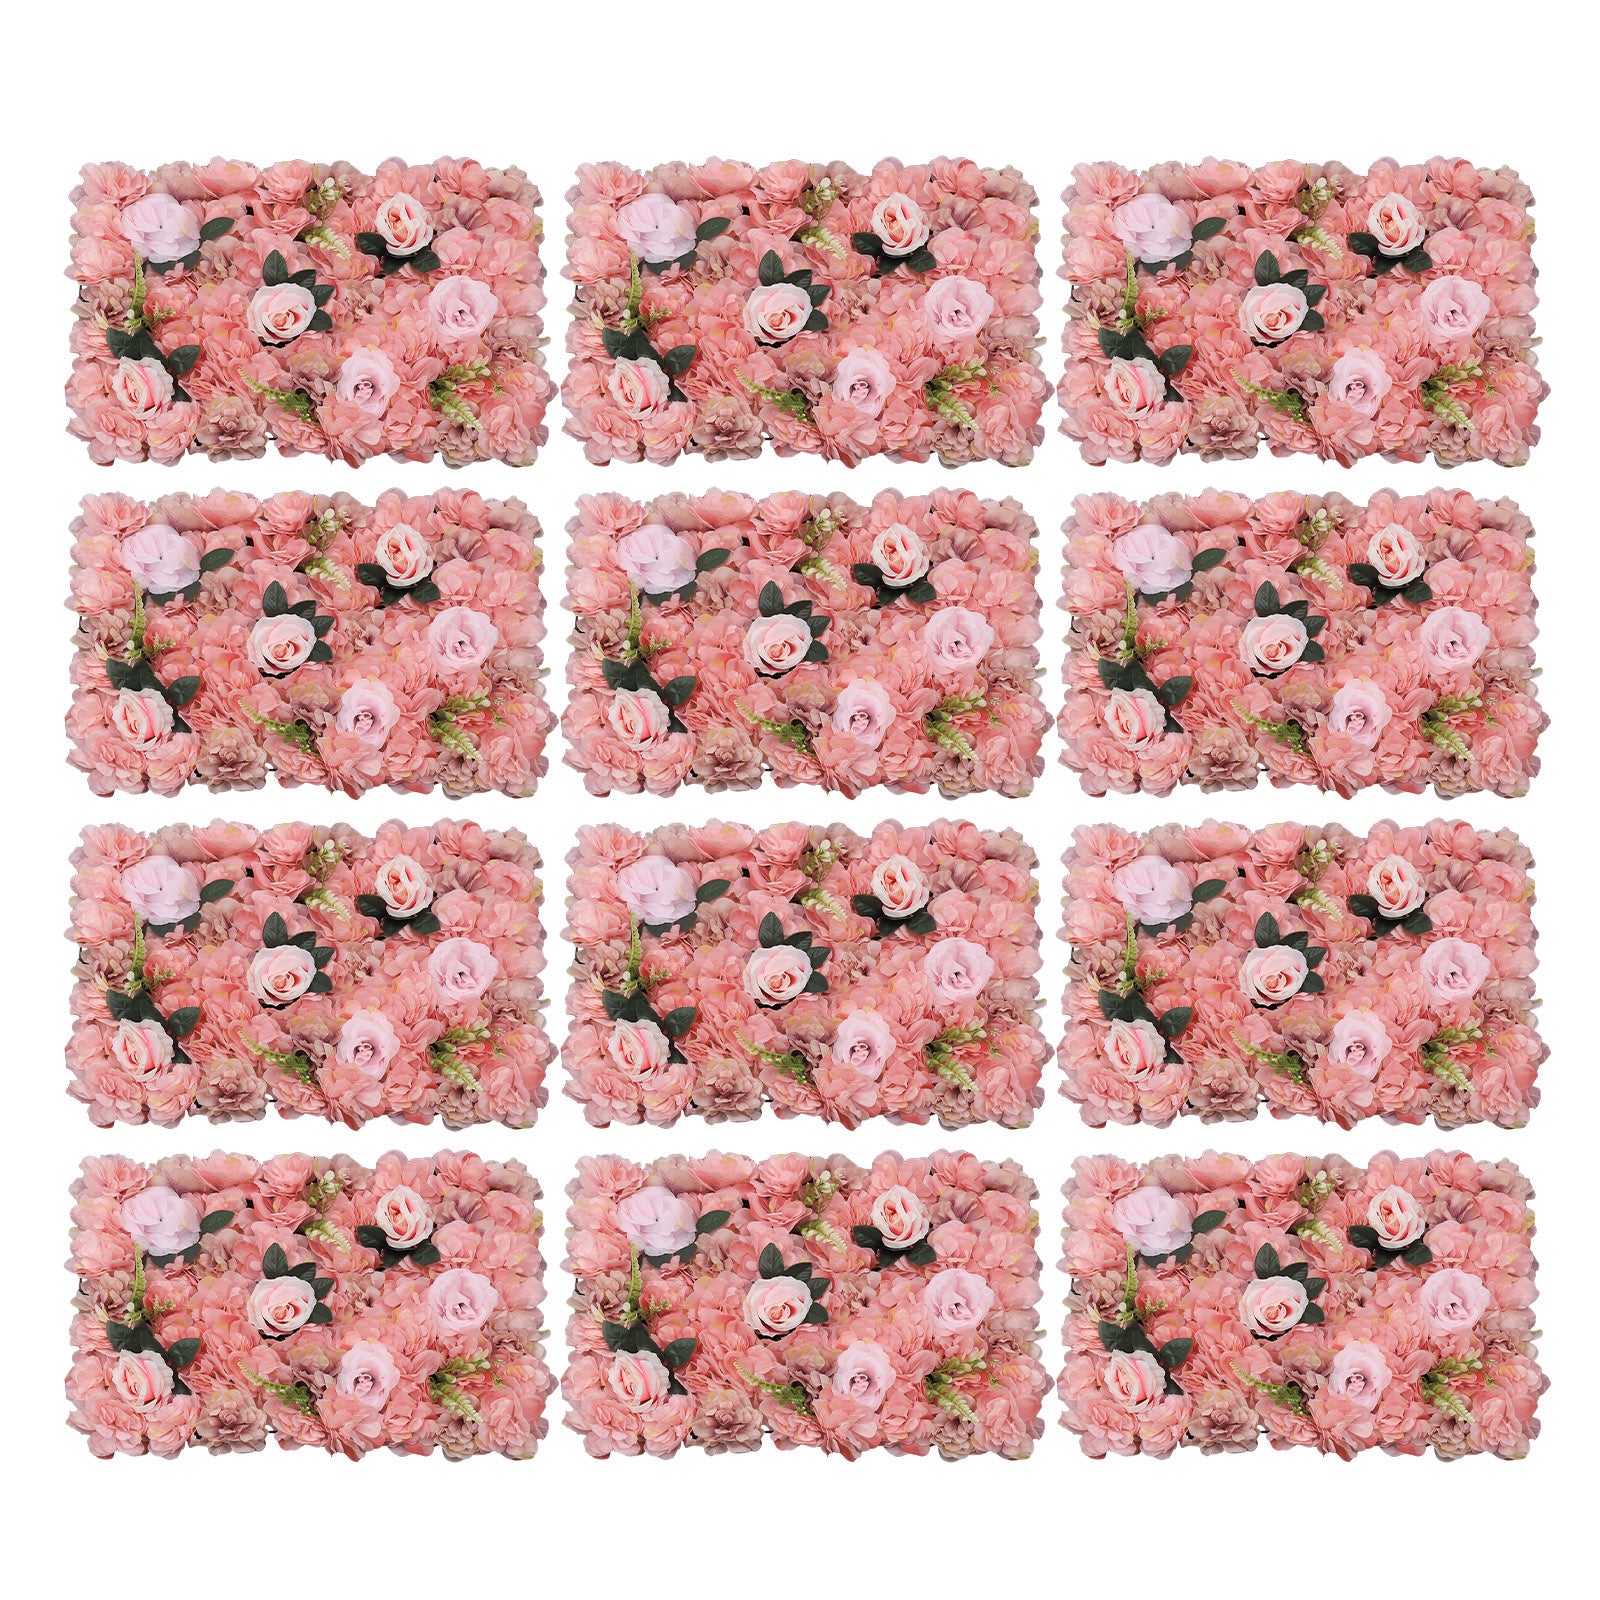 12 pannelli di fiori artificiali